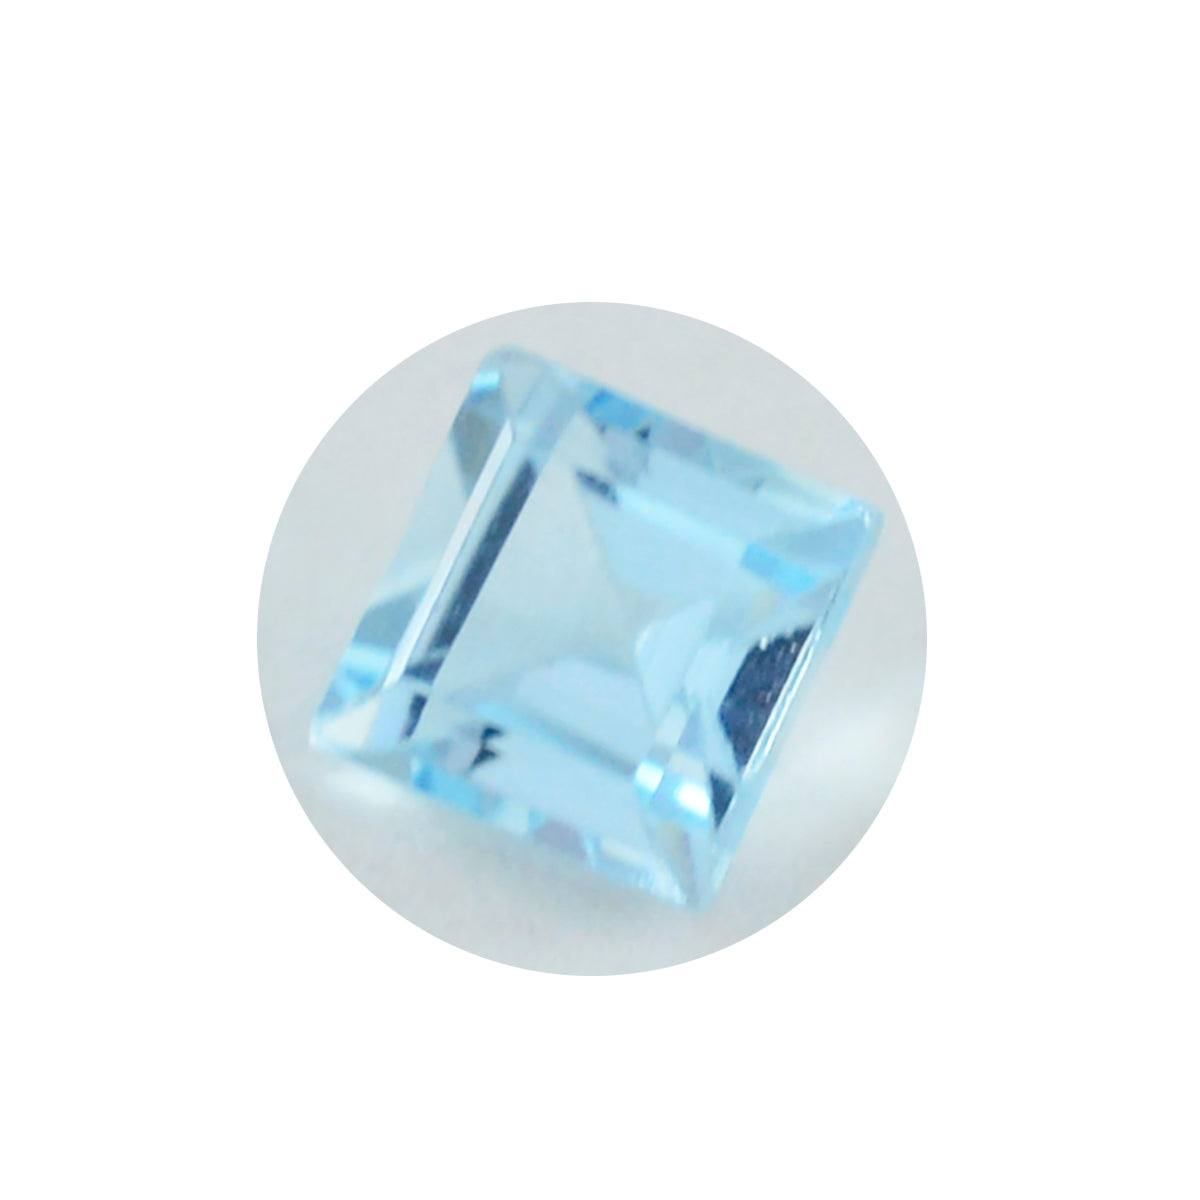 Riyogems 1PC Genuine Blue Topaz Faceted 13x13 mm Square Shape excellent Quality Gems